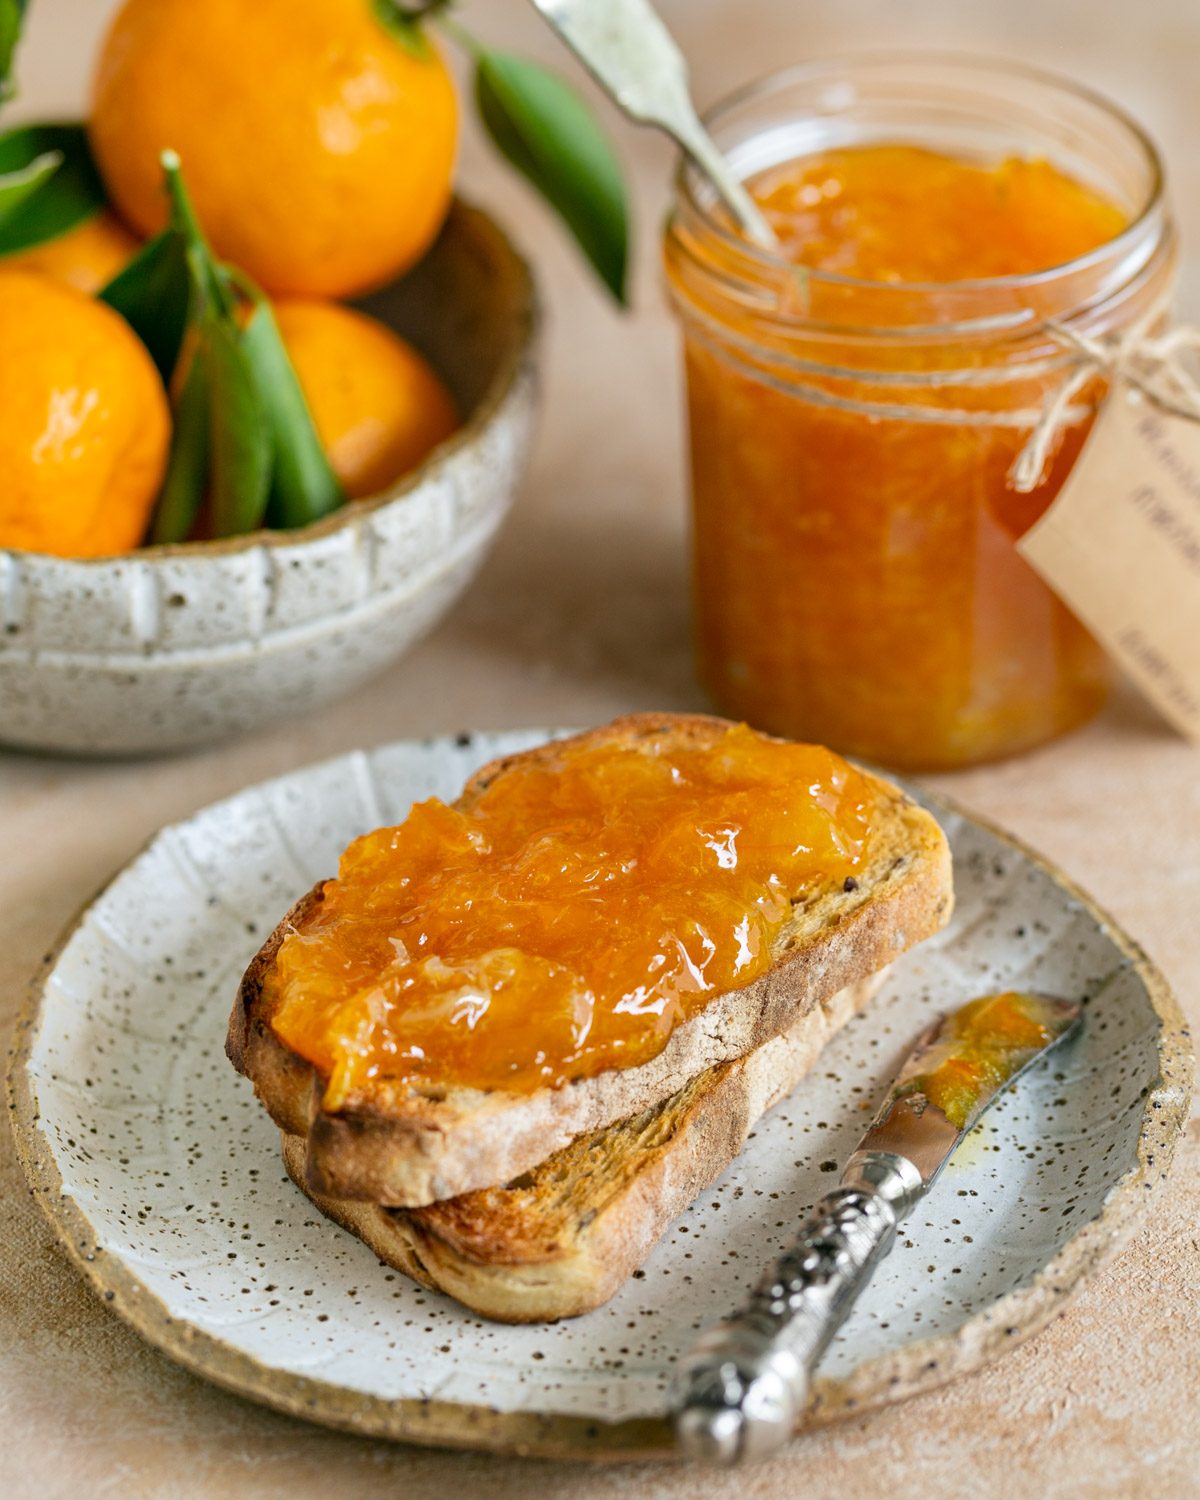 Mandarin Marmalade spread over toast